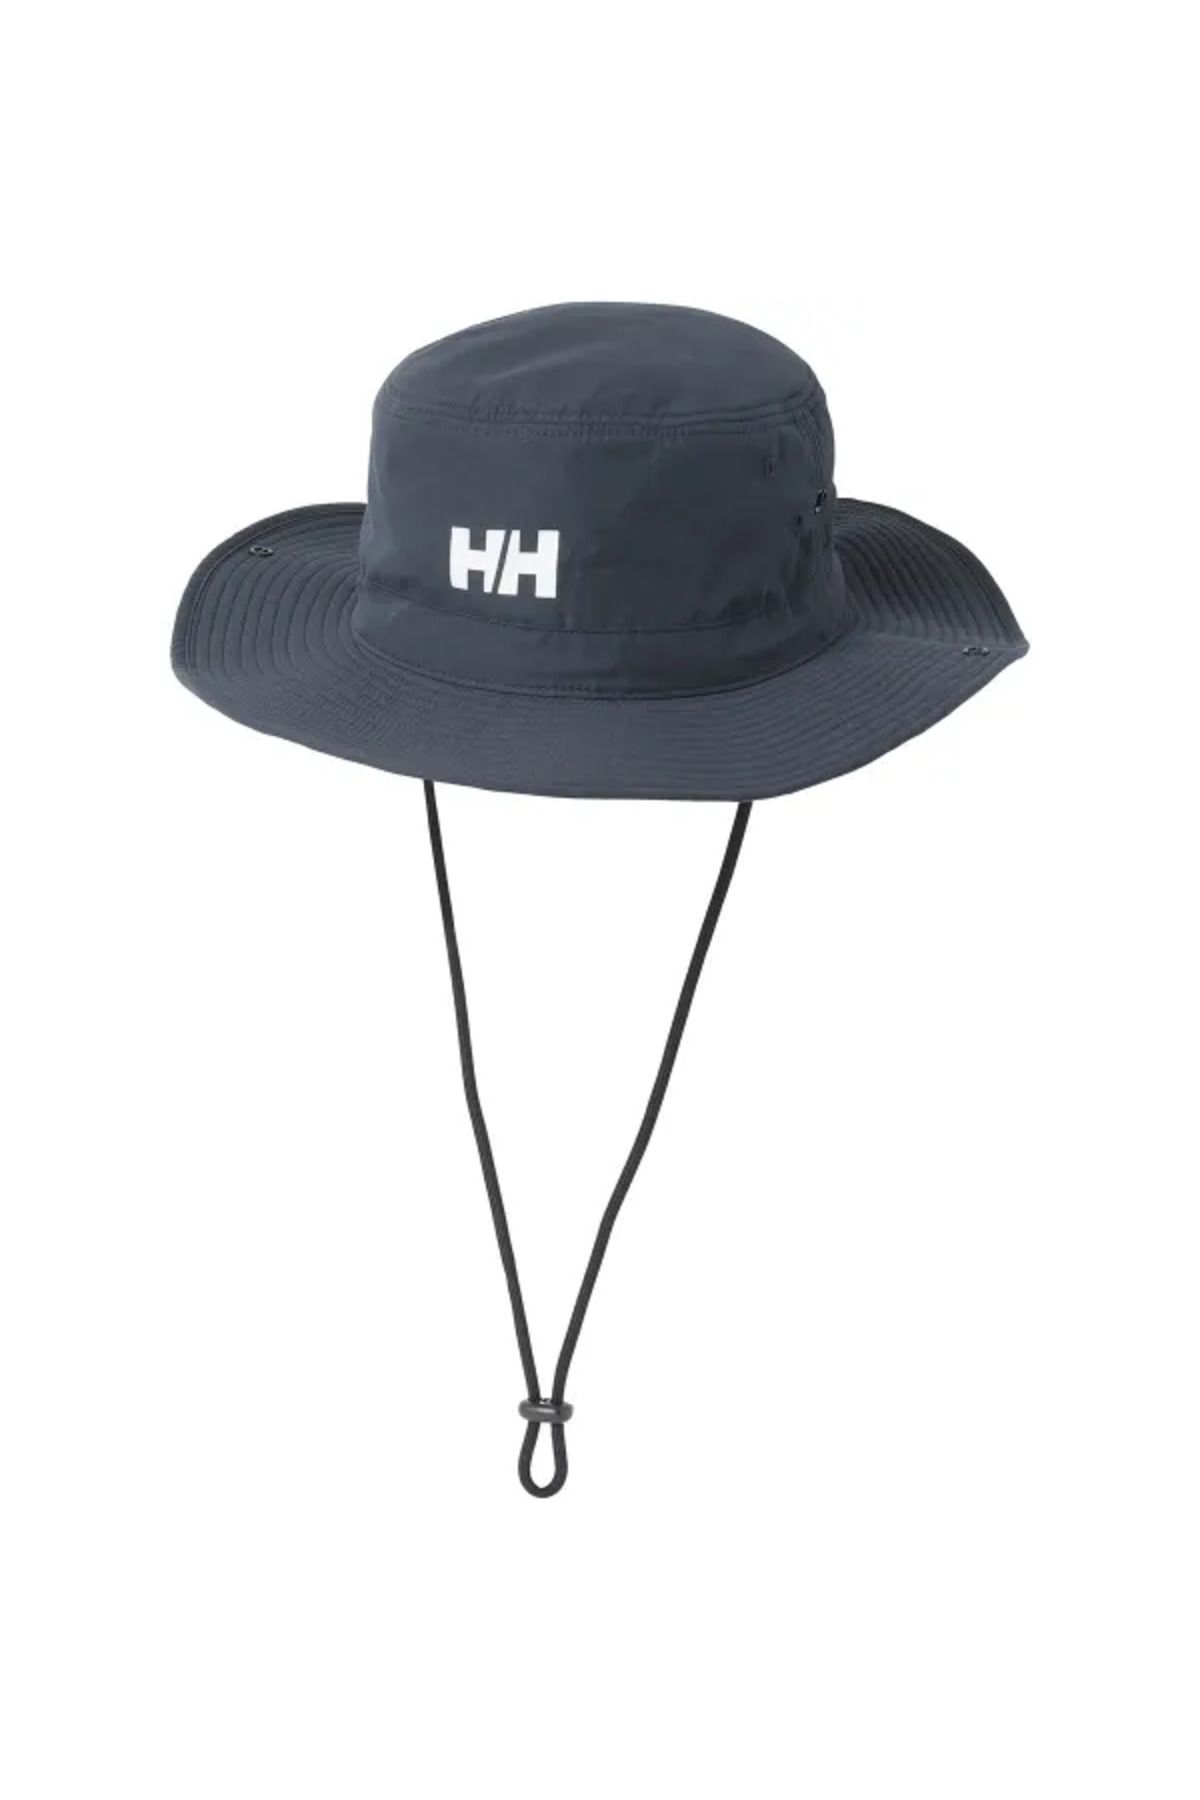 Helly Hansen Helly Hansen Crew Sun Şapka Unısex Lacivert Şapka Hha.67521-hha.597